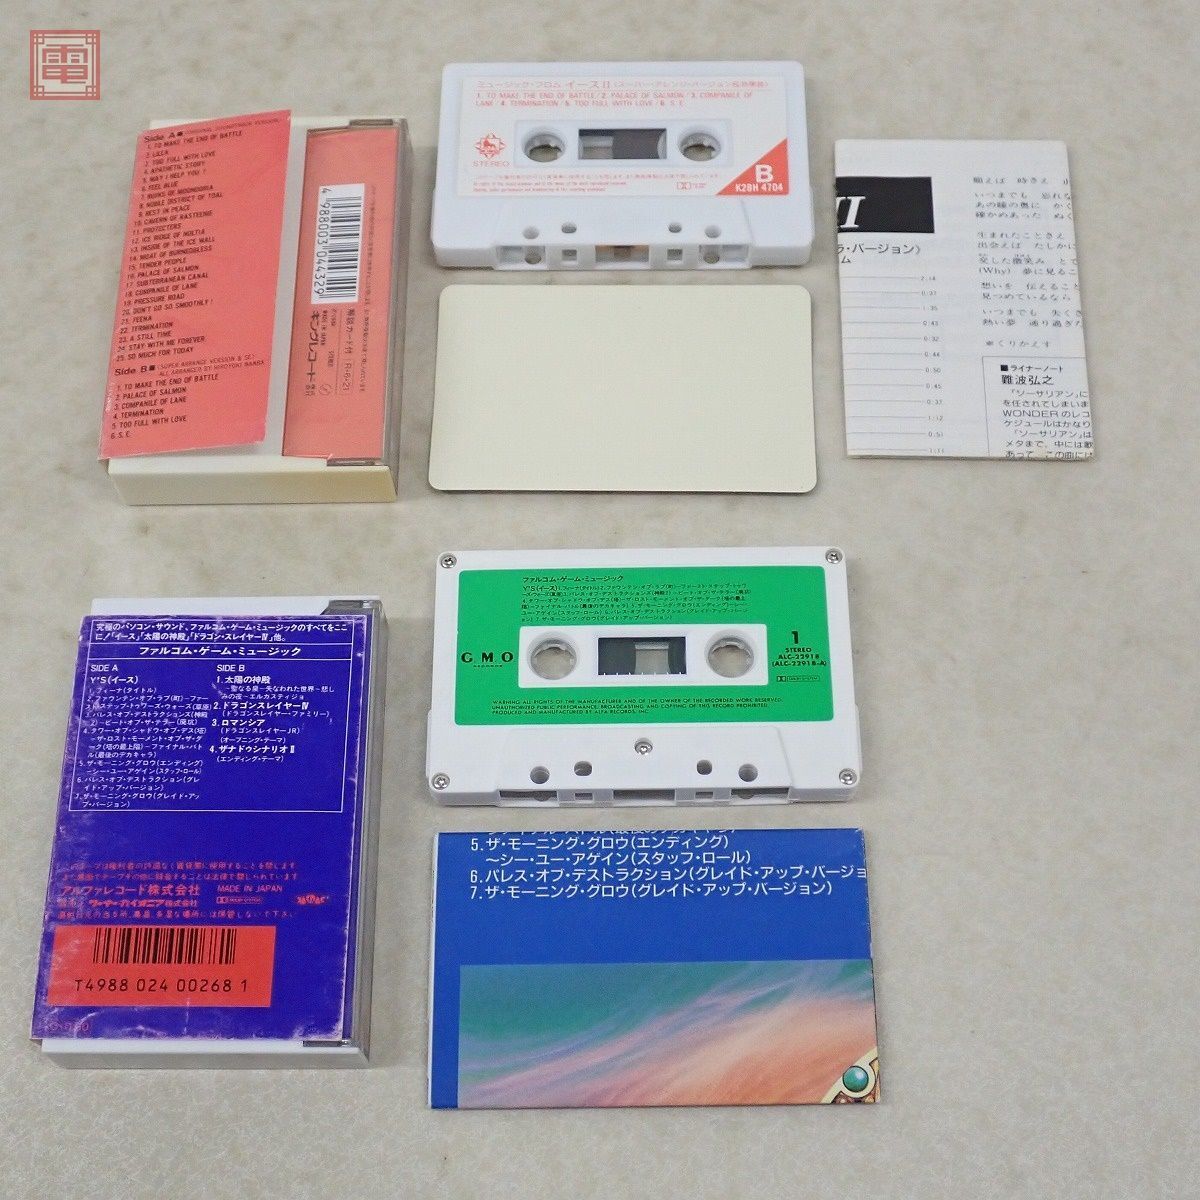  cassette tape soundtrack Falco m game music Xanadu e-s II 3 point set FALCOM[10